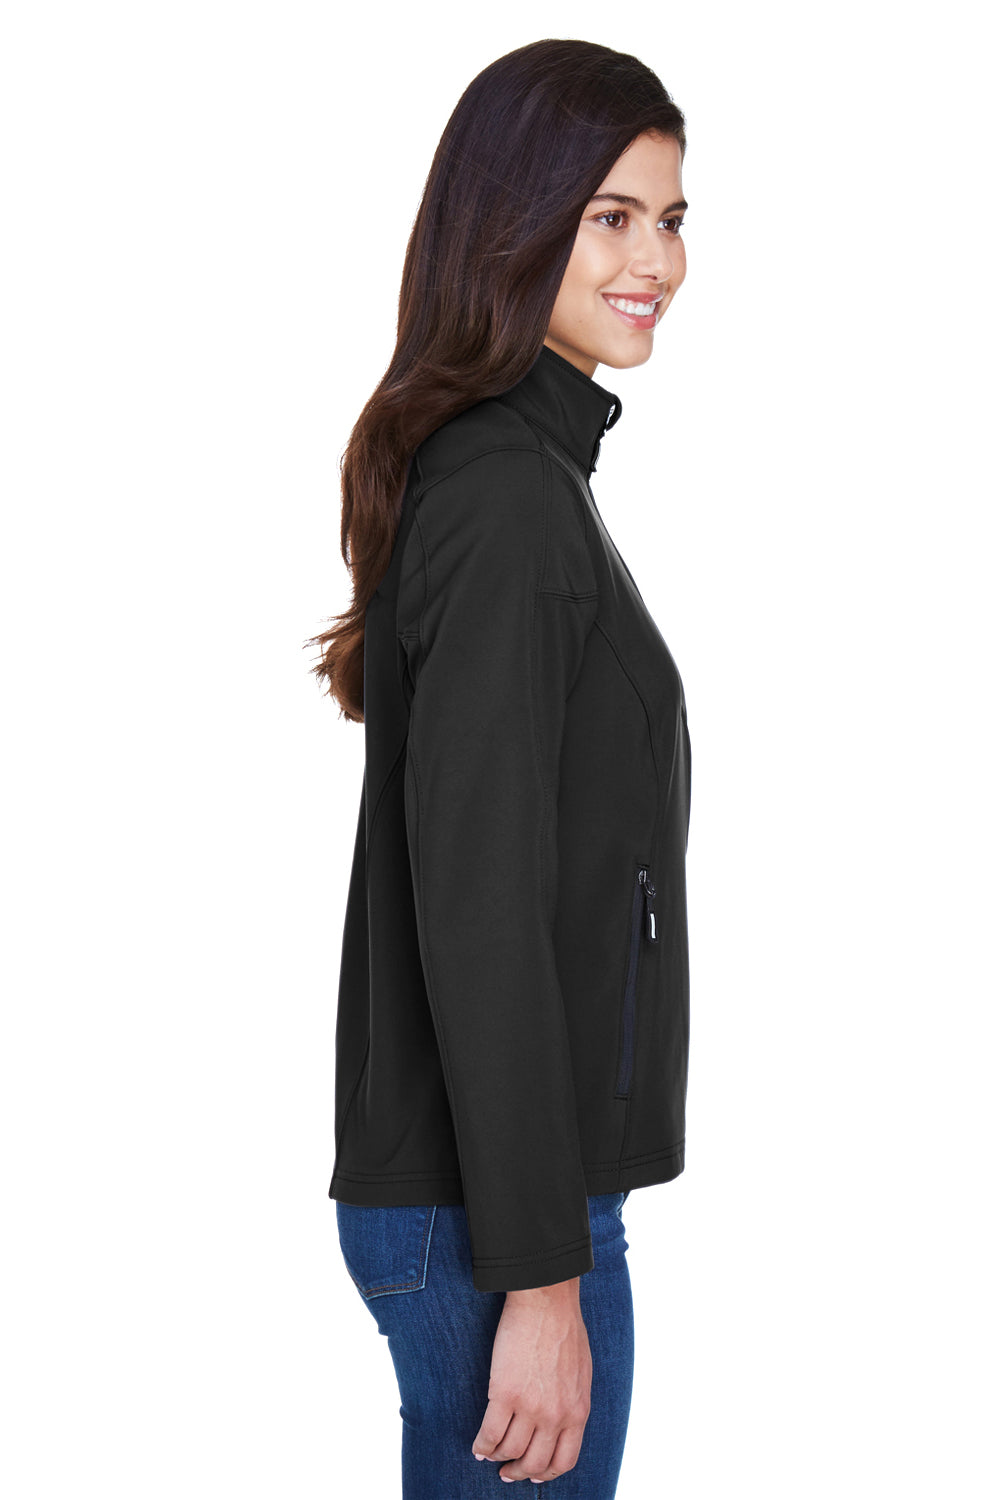 Core 365 78184 Womens Cruise Water Resistant Full Zip Jacket Black Side